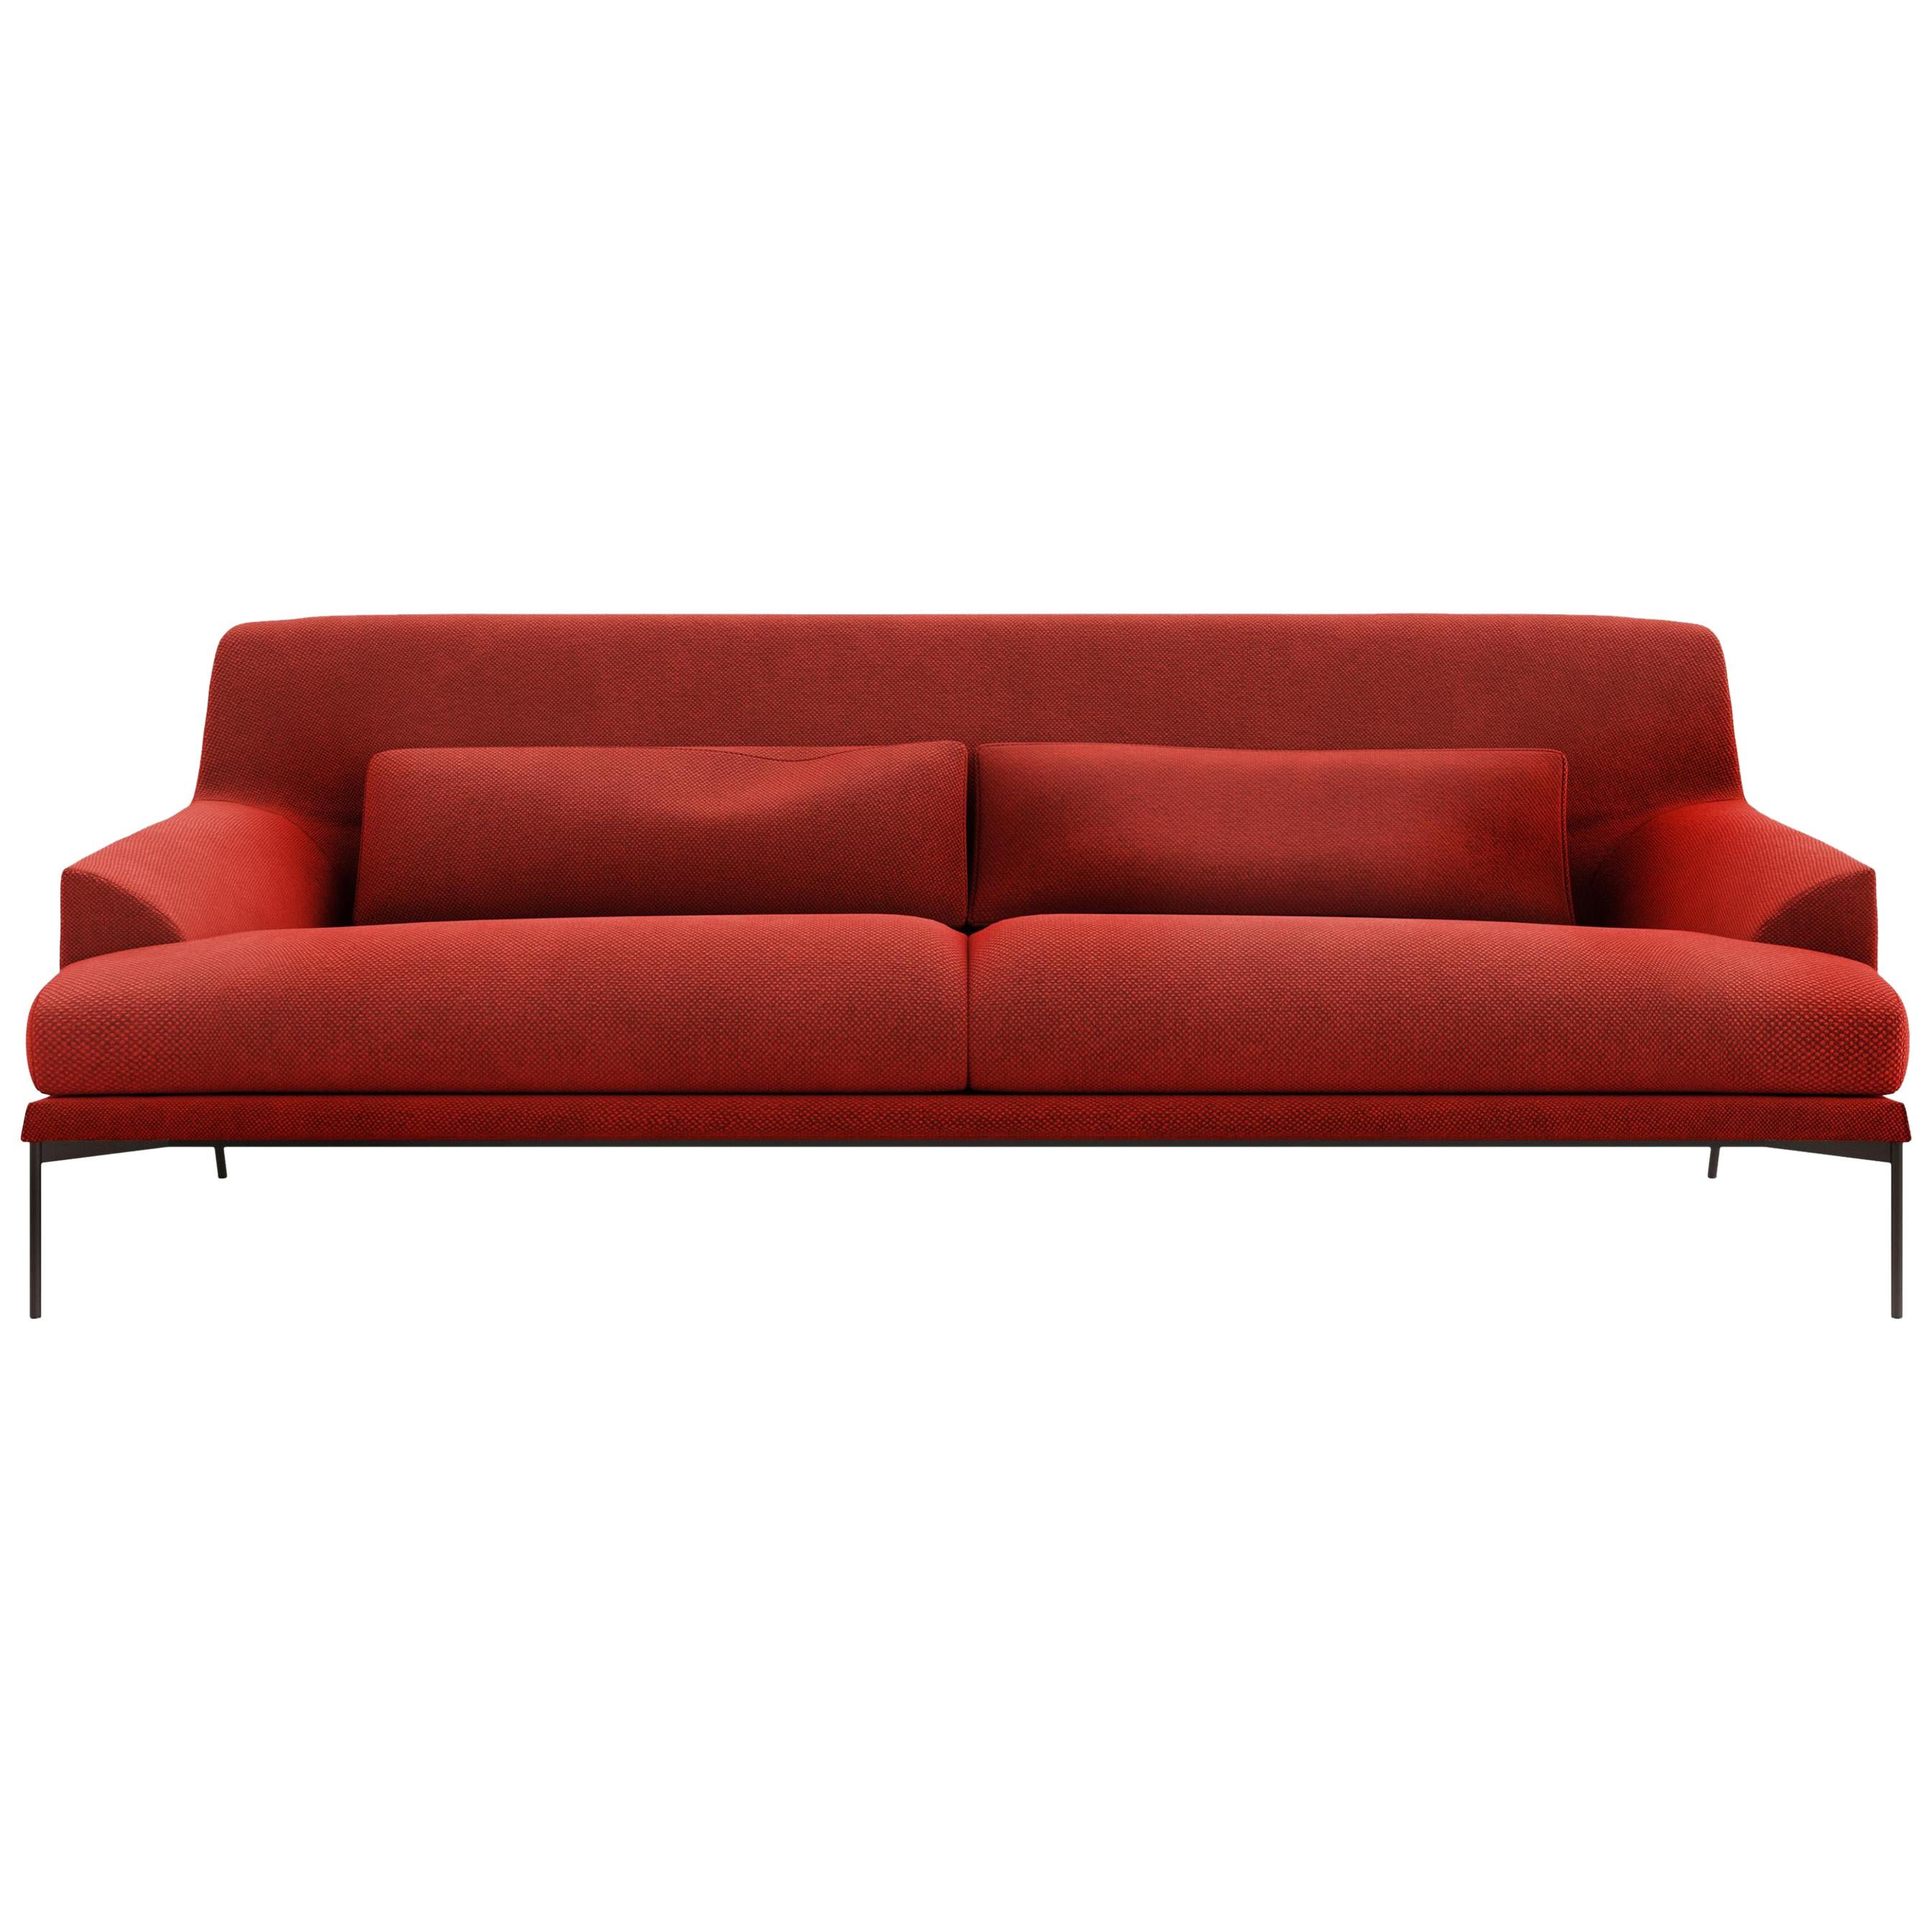 Customizable Montevideo Sofa Designed Claesson Koivisto Rune